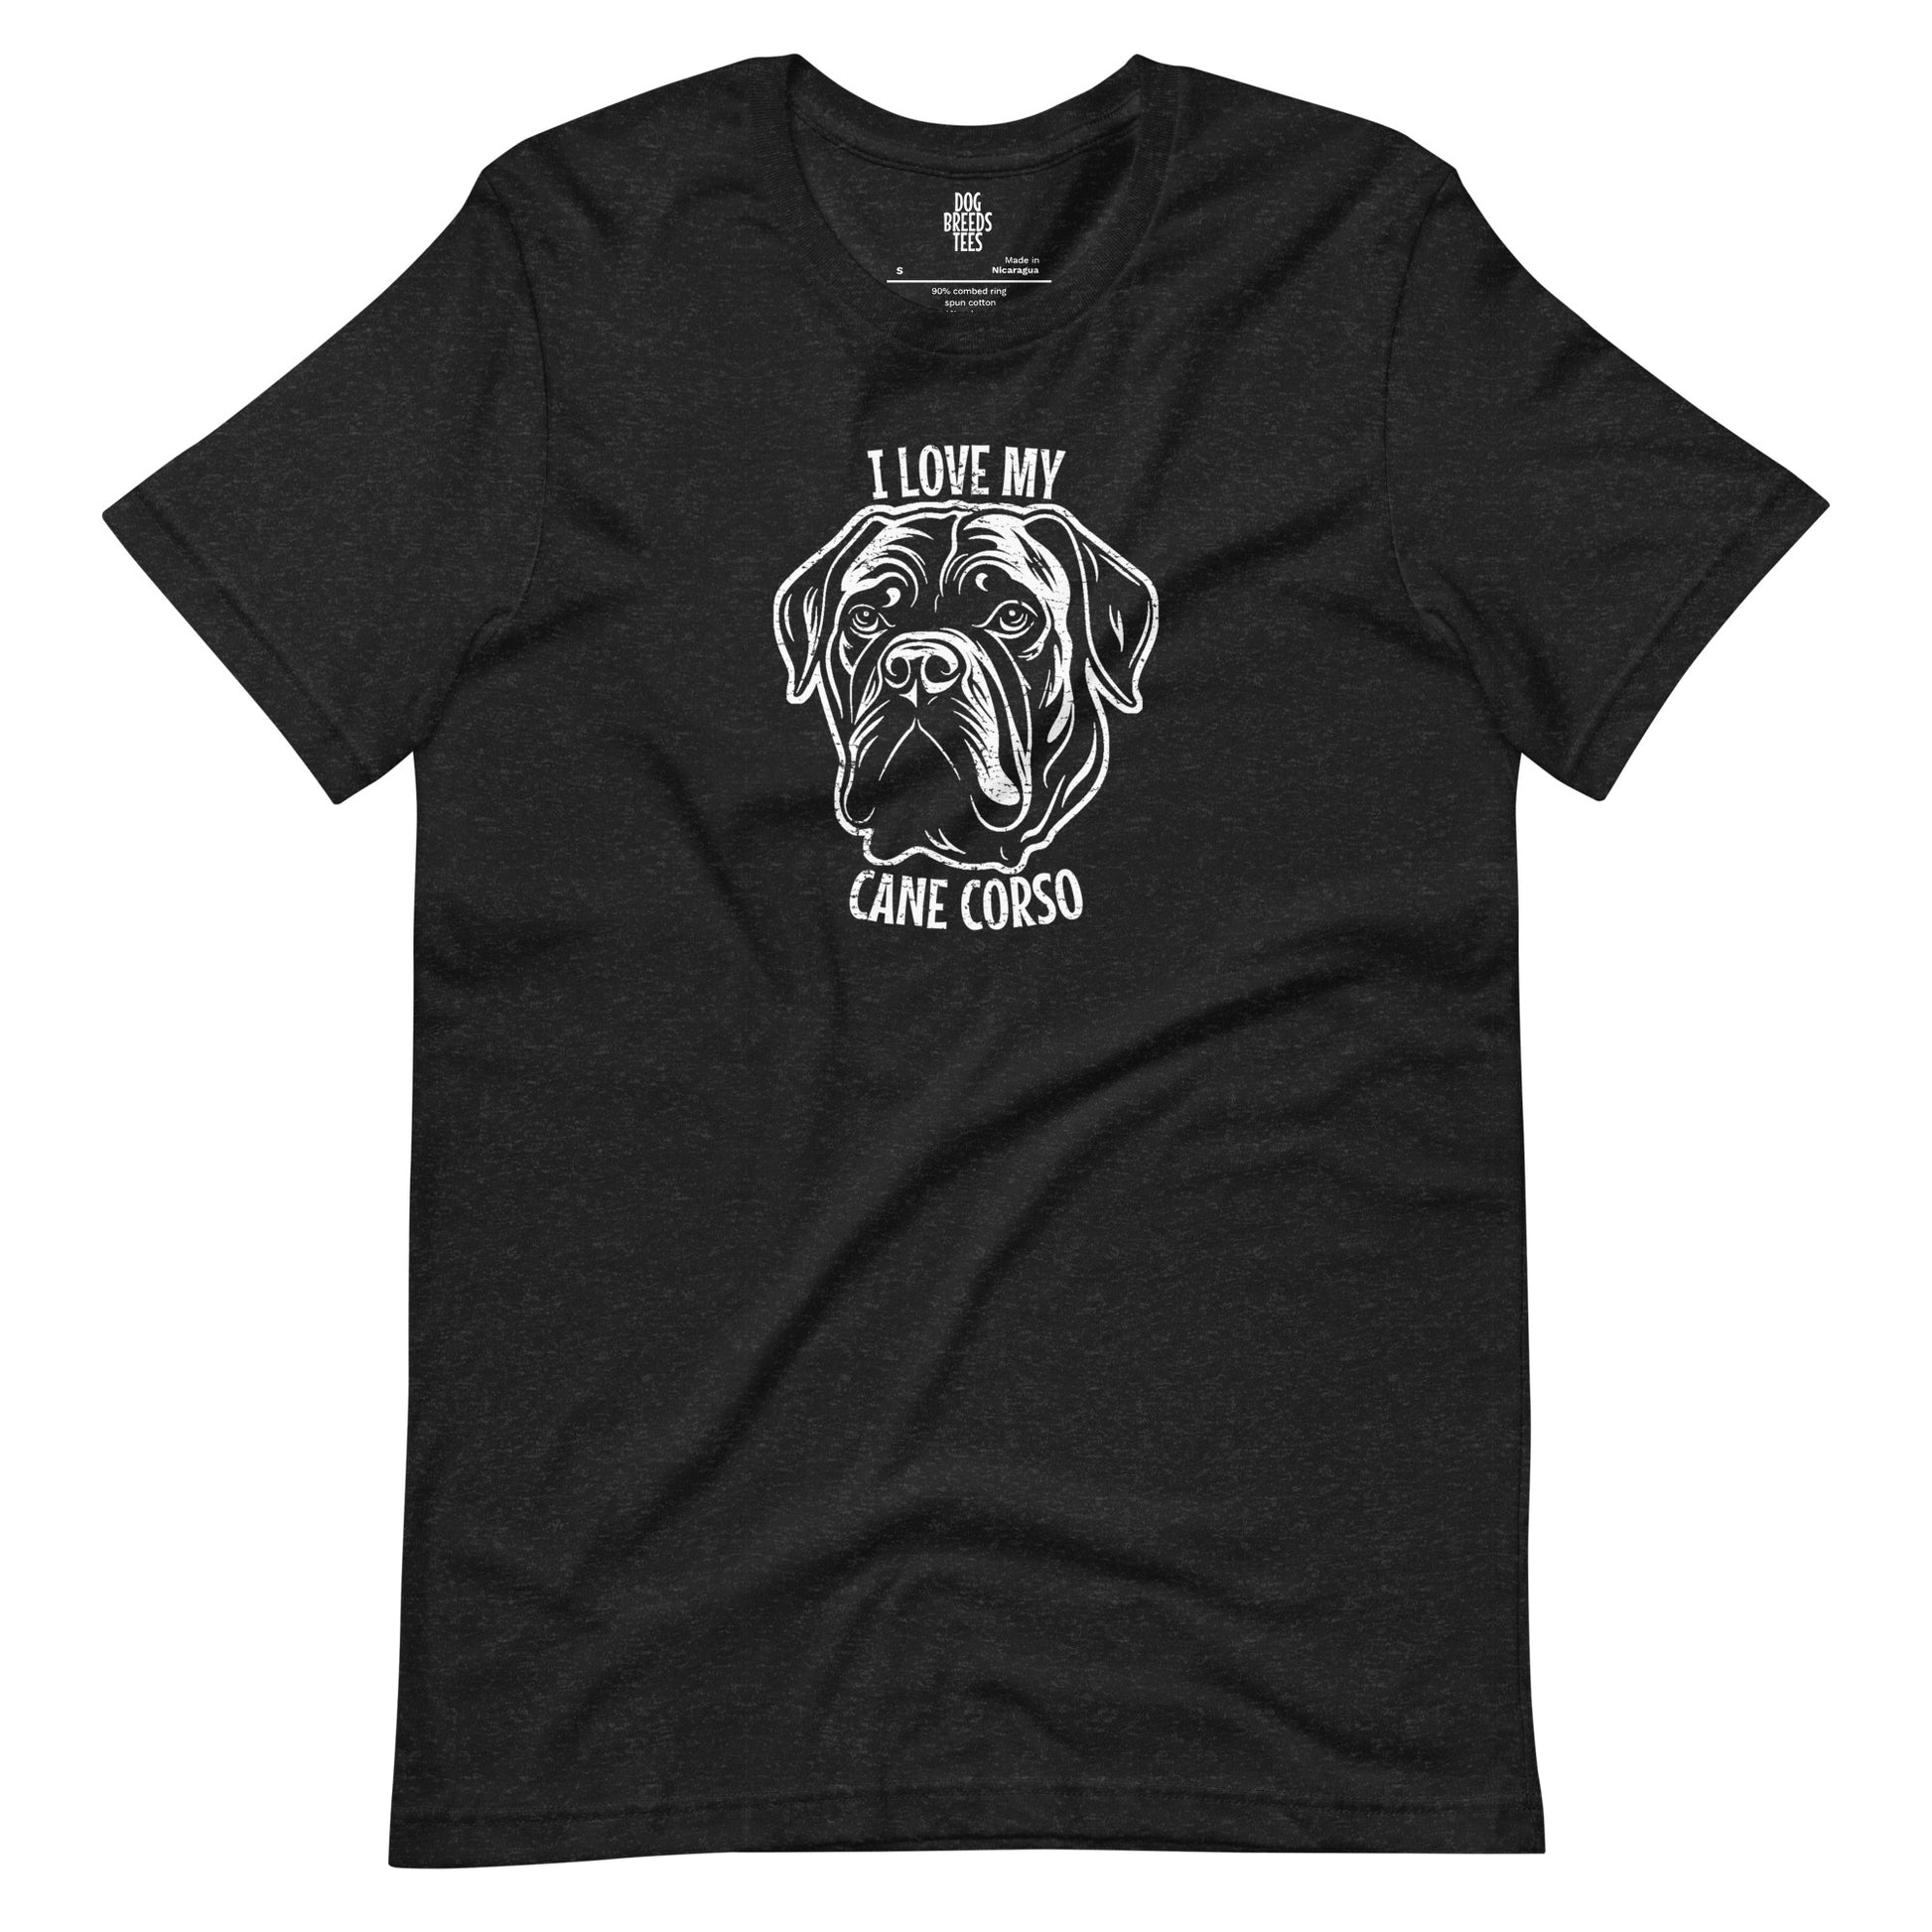 Cane Corso Shirt, Cane Corso gift, gift for dog mom, custom dog gift, dog owner gift, pet memorial gift